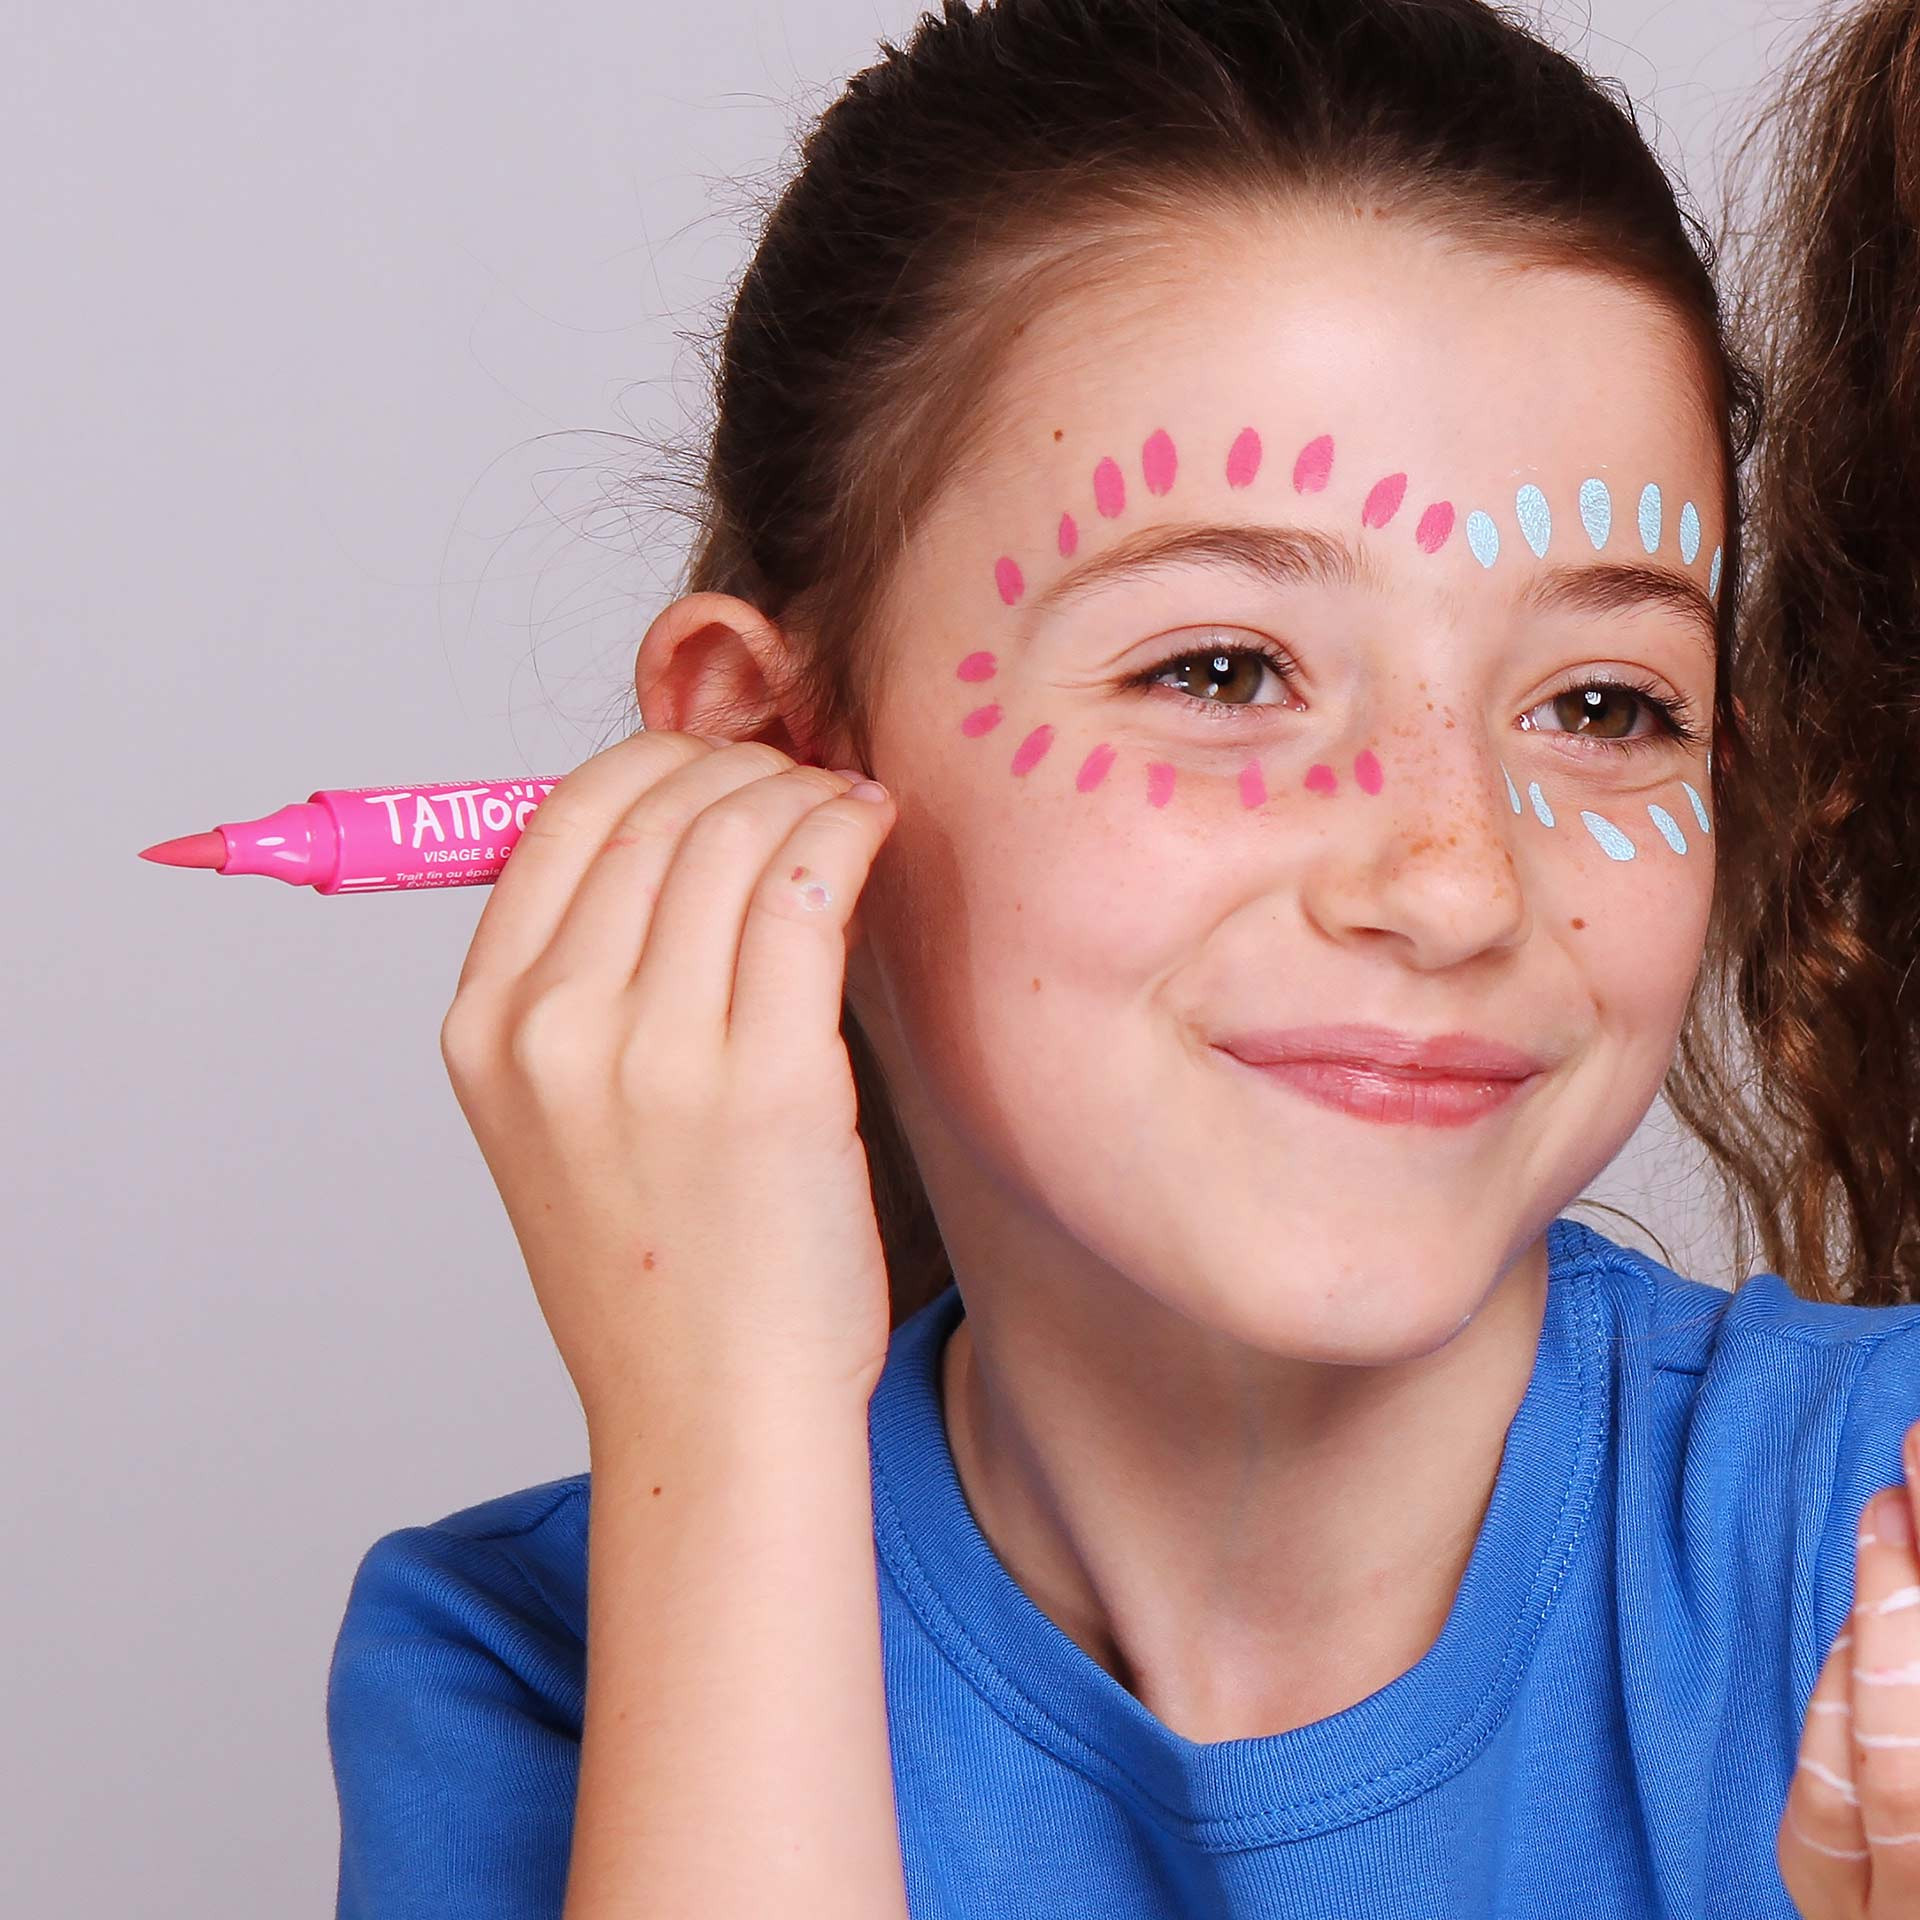 maquillage enfant petite fille dessin sur peau rose tattoopen nailmatic kids